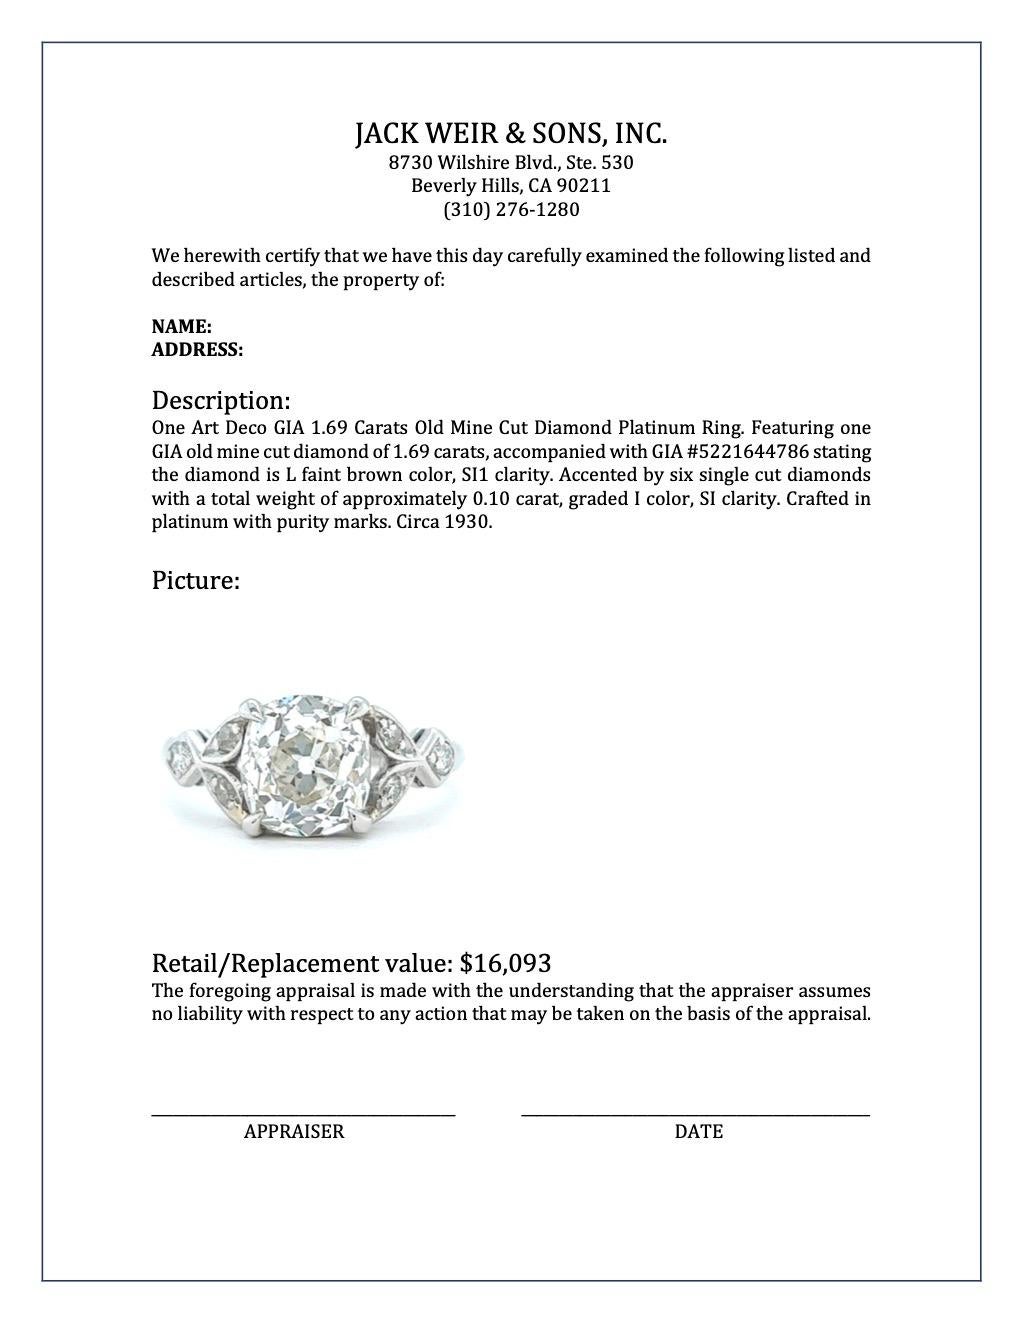 Art Deco GIA 1.69 Carats Old Mine Cut Diamond Platinum Ring 4